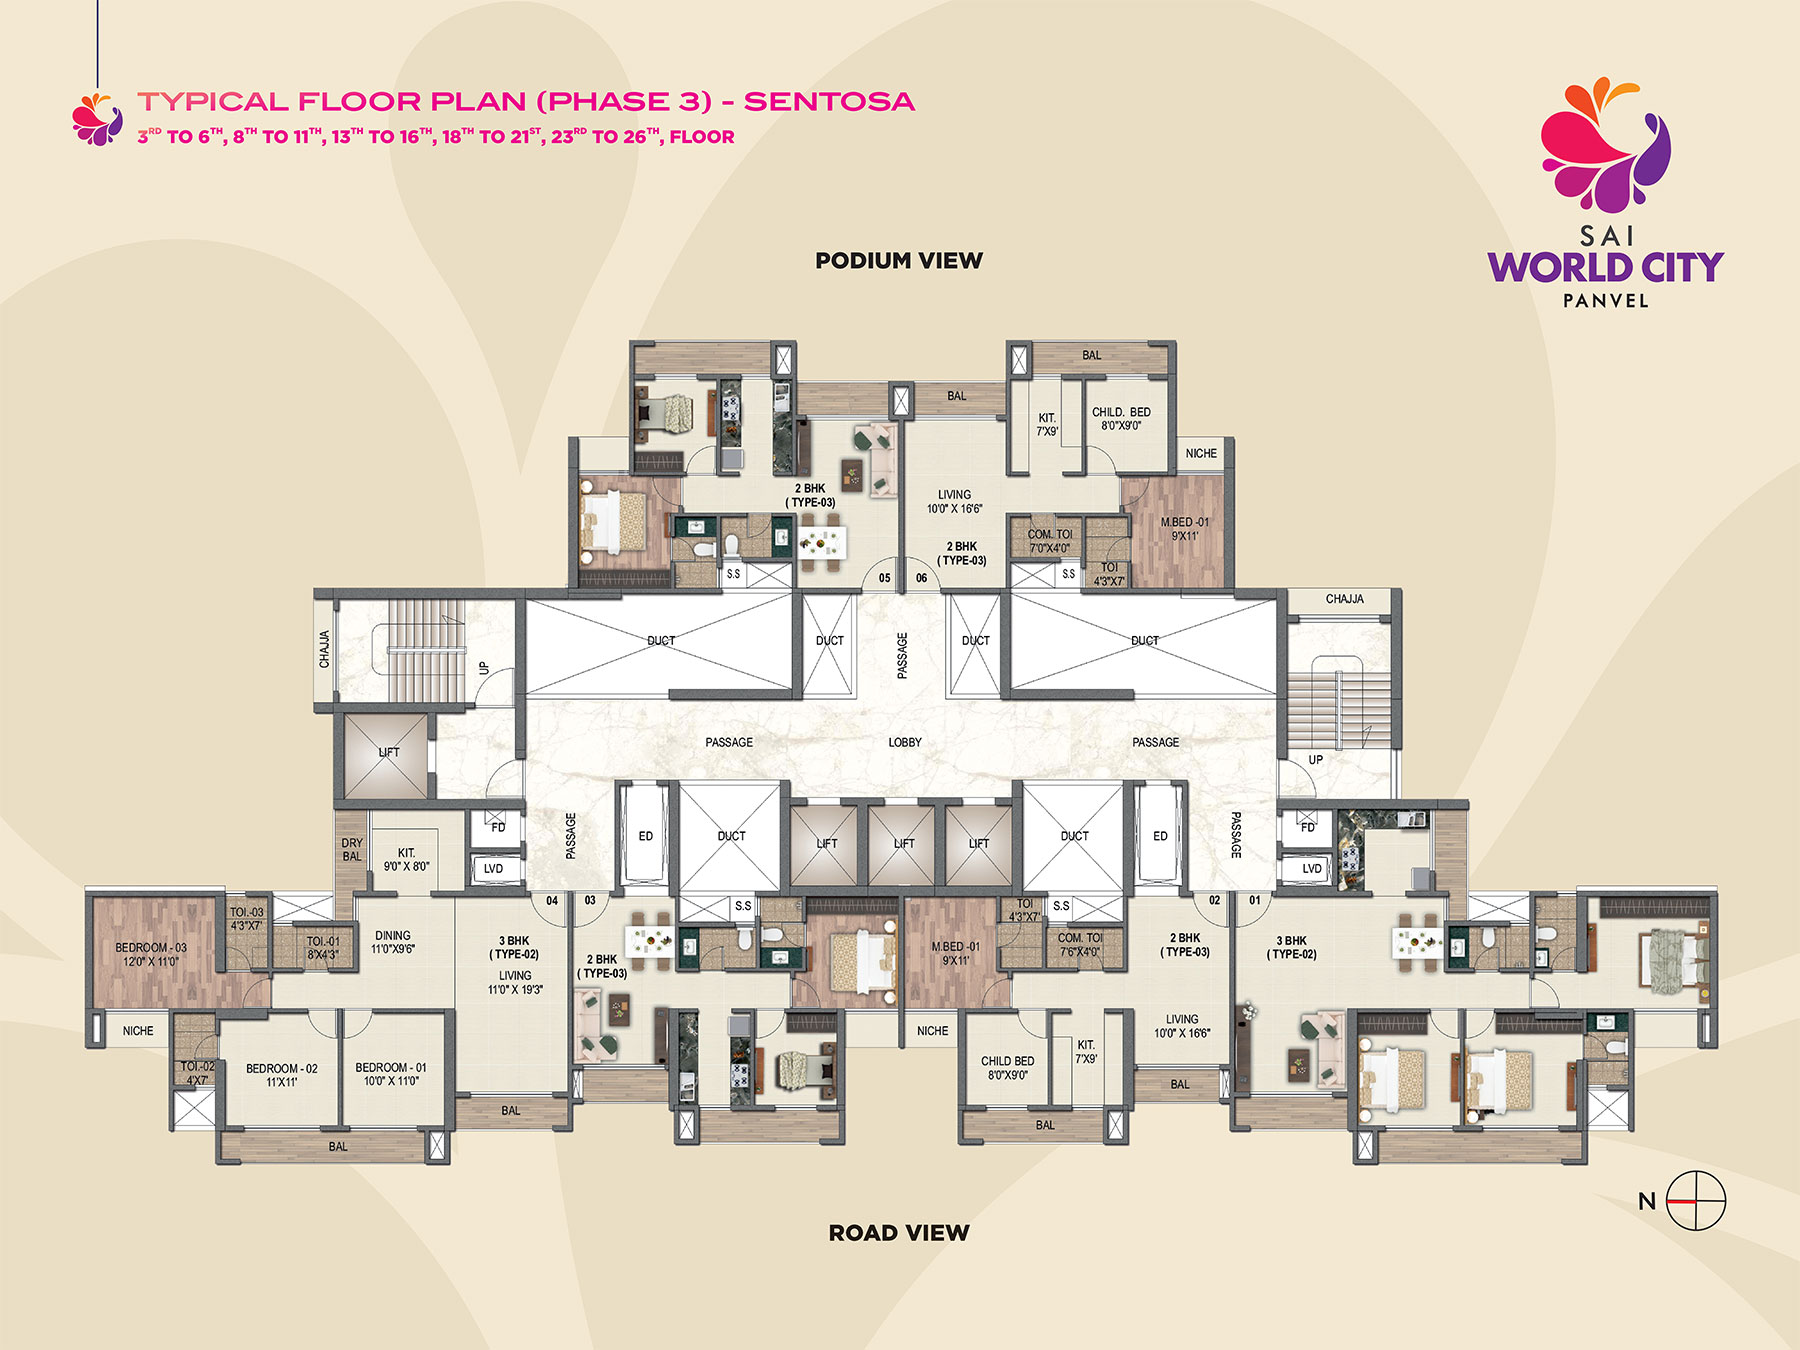 Typical Floor Plan (Phase 3) - SENTOSA